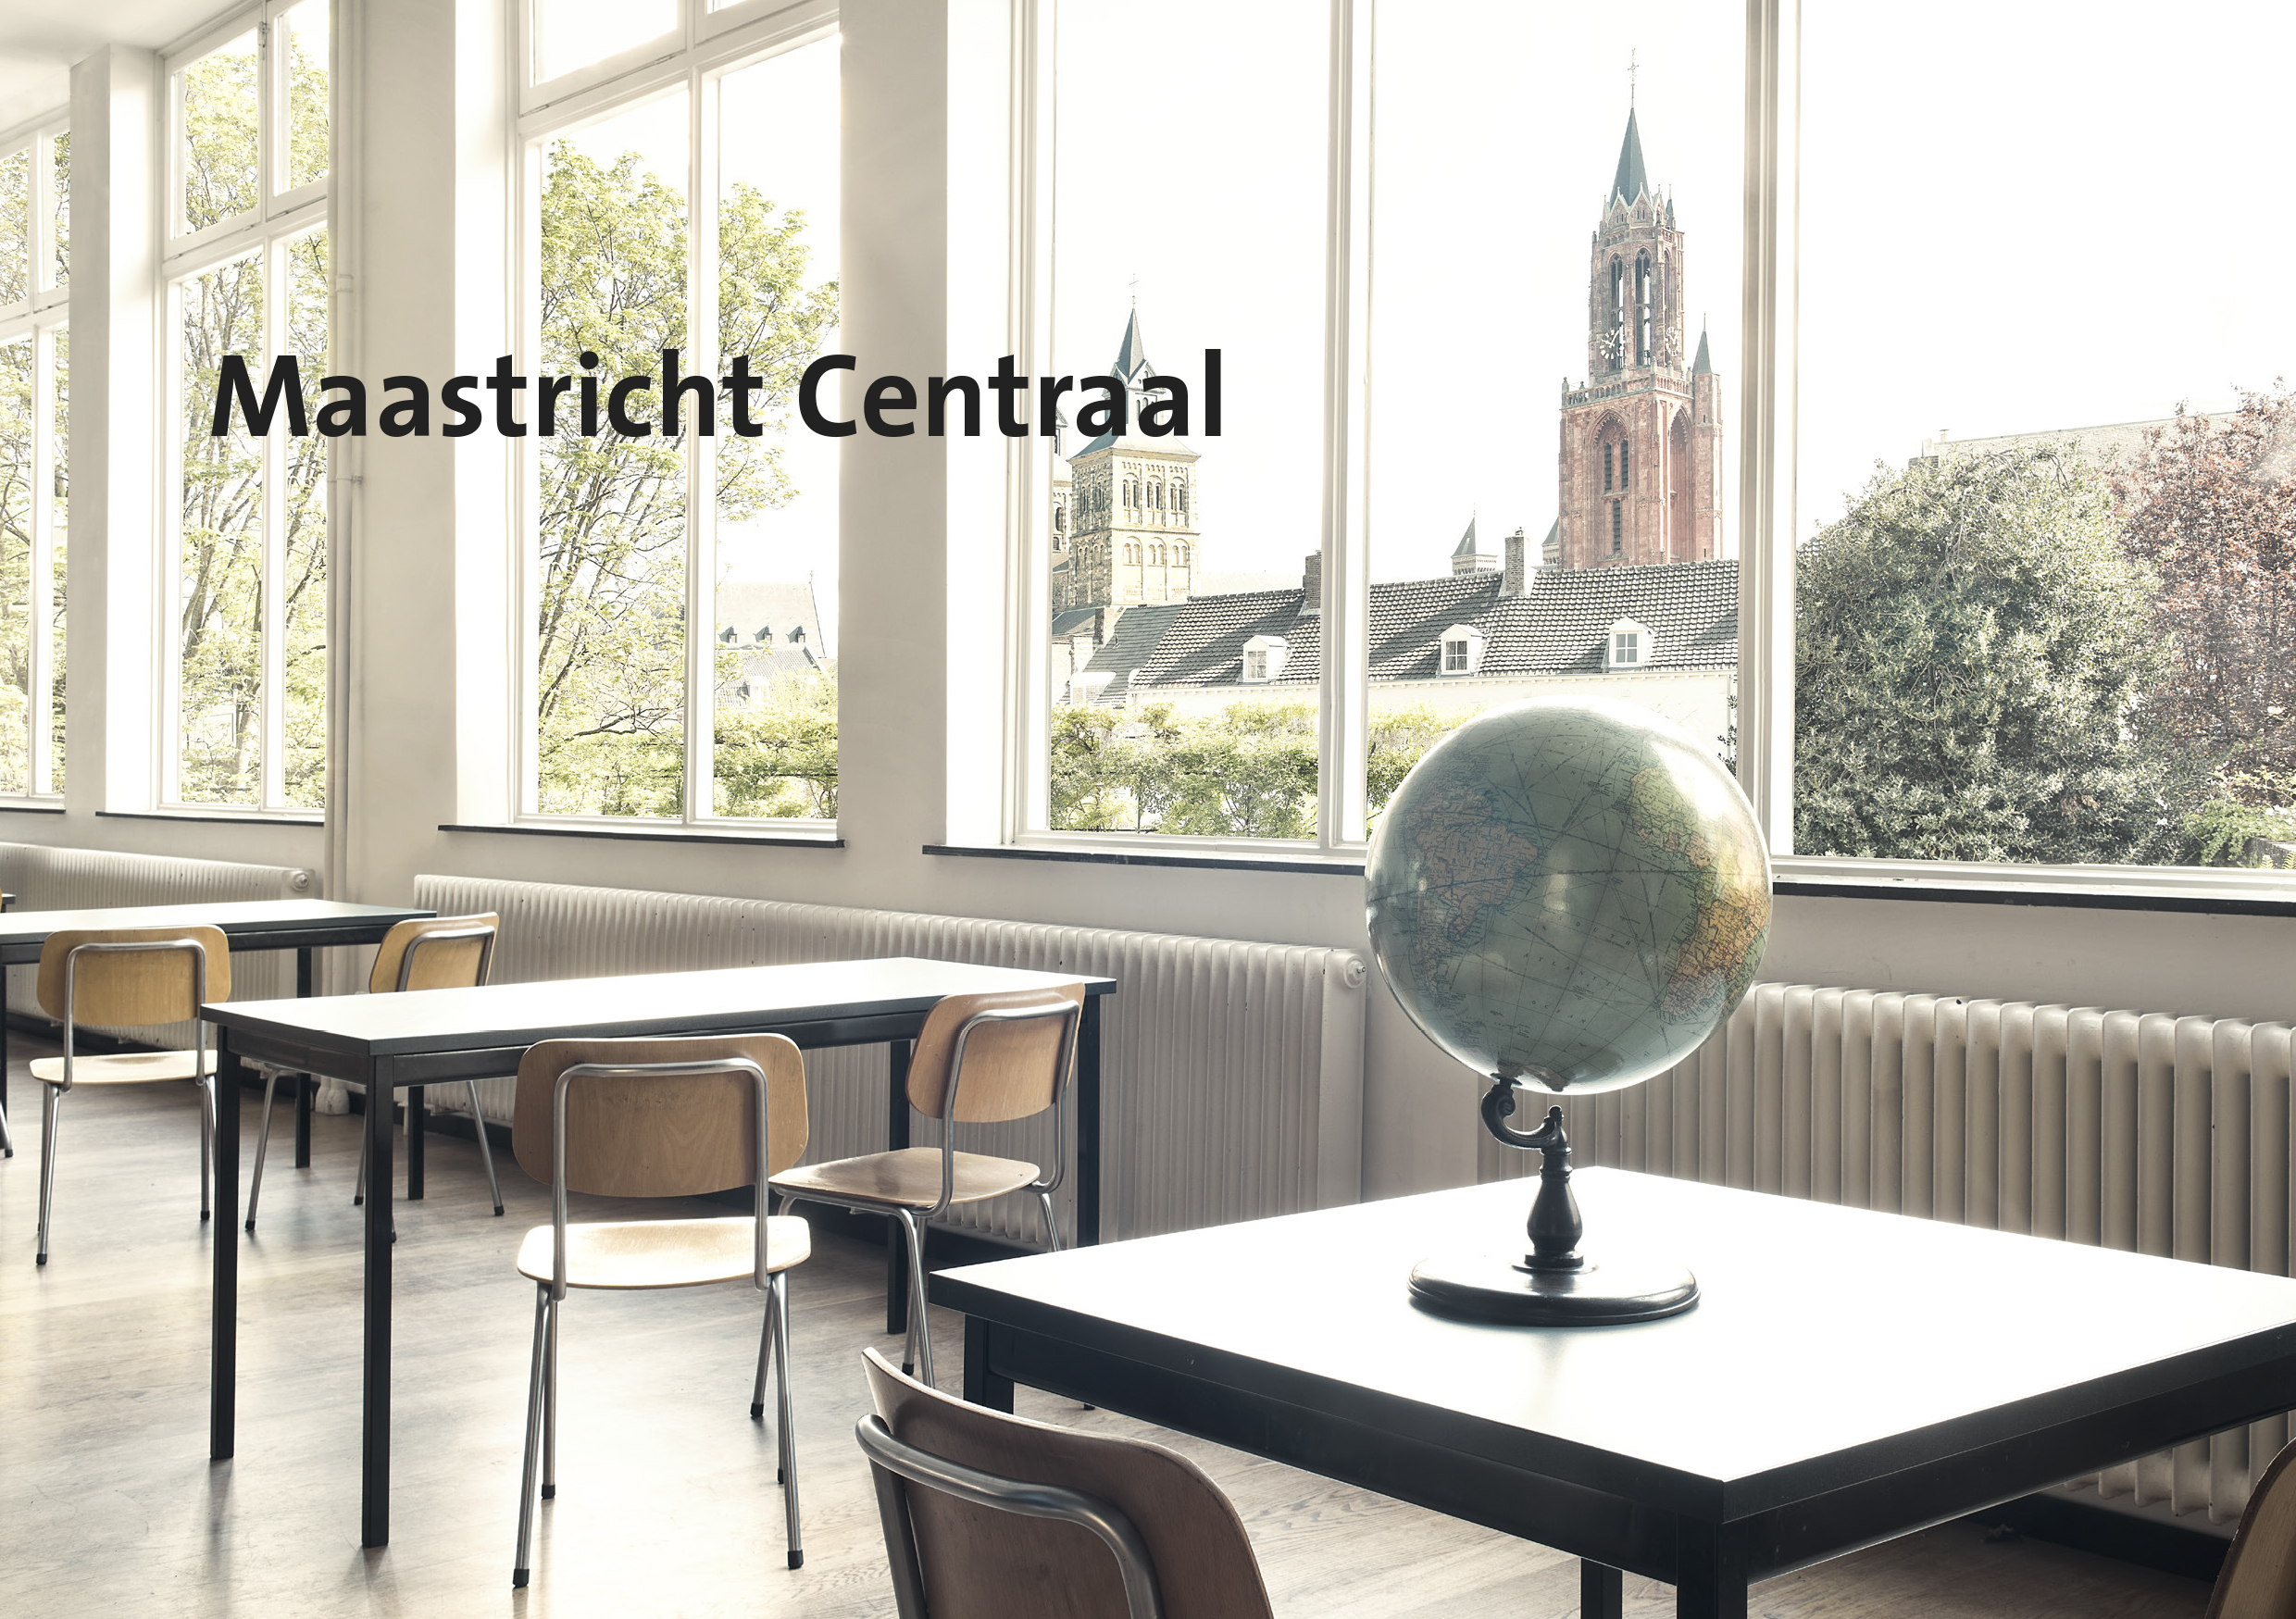 Maastricht Central